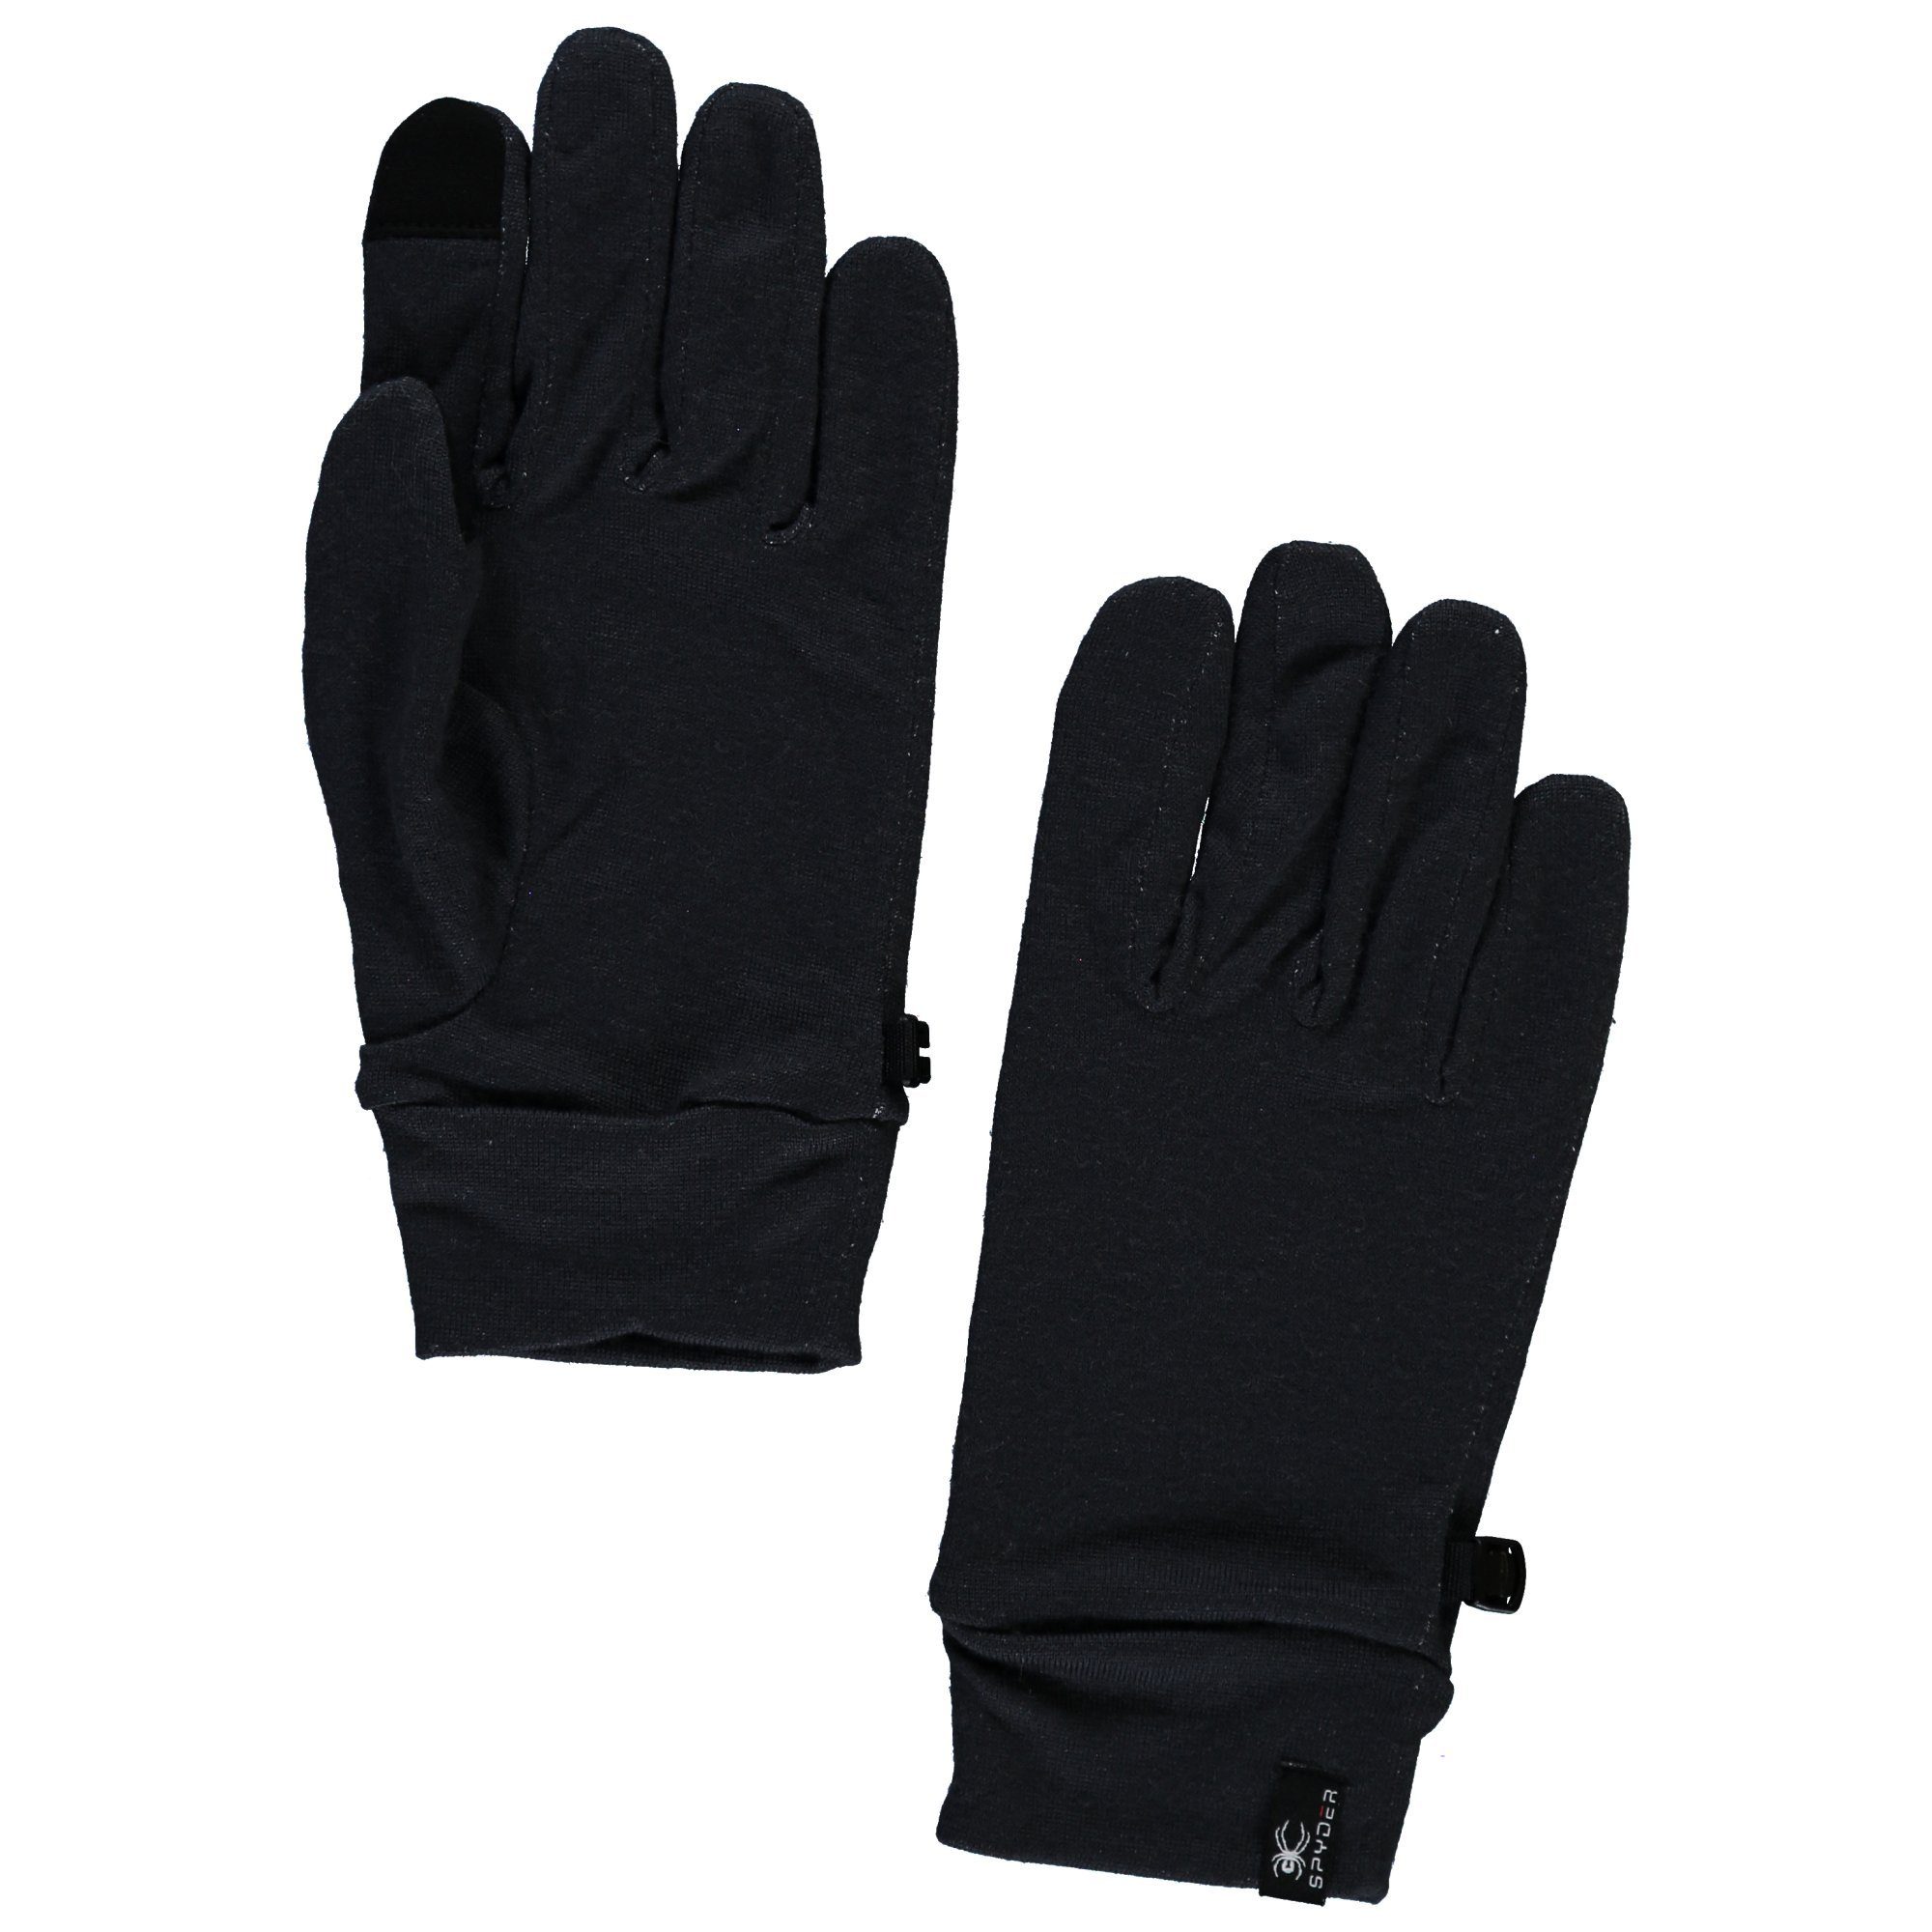 Handschuhe, Jersey Skihandschuhe mit Stretch AVRA™-Garn Single CENENNIAL Wollmischmischgewebe Ski Spyder